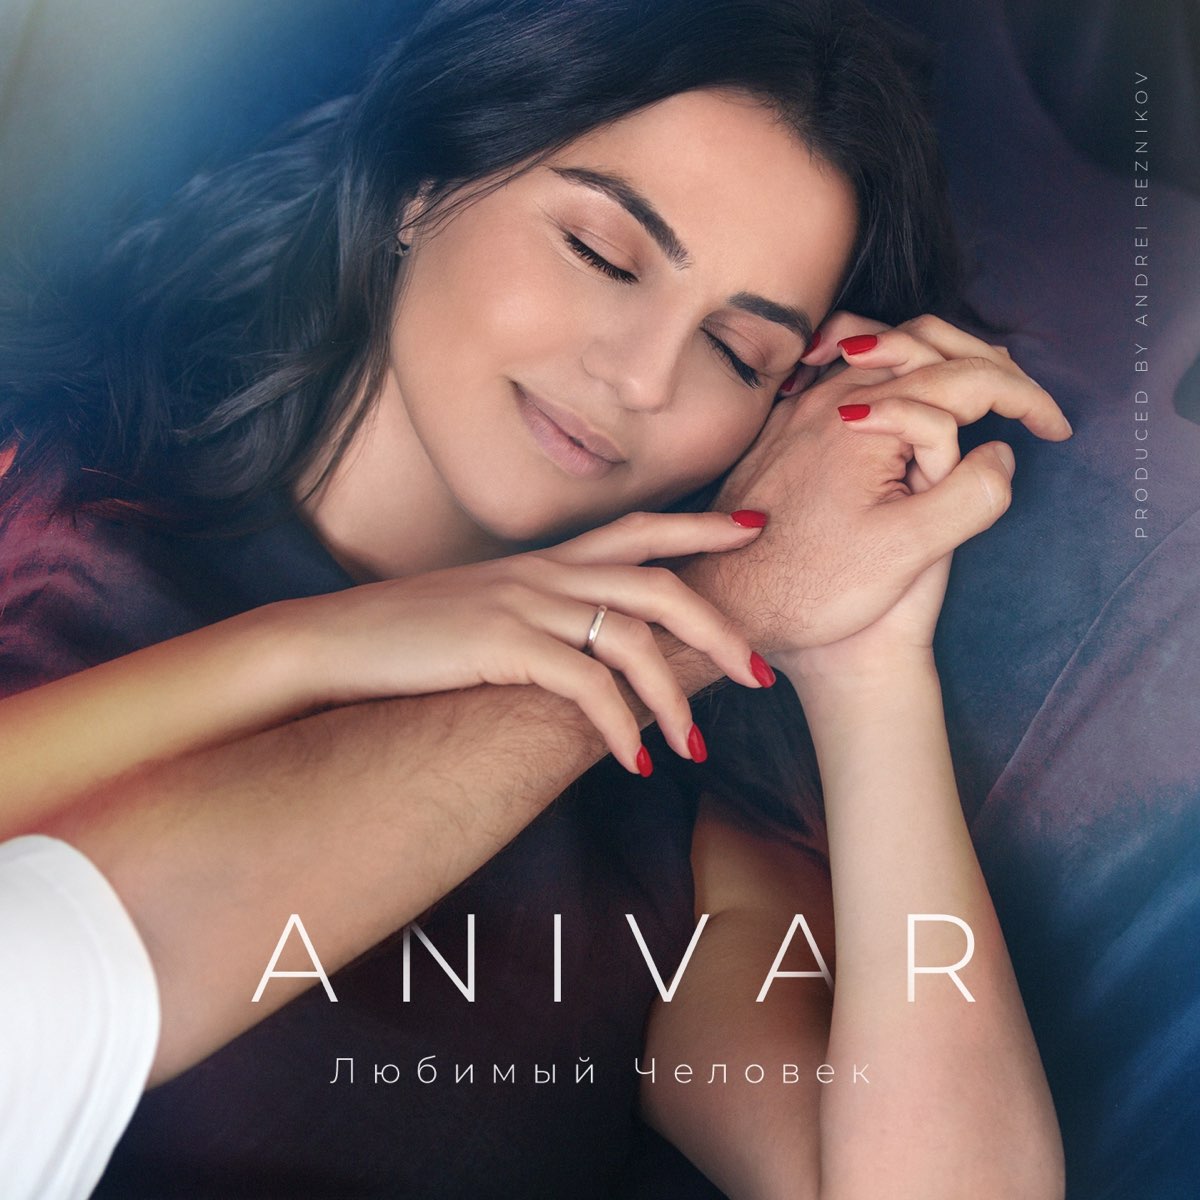 Любимый человек - Single by ANIVAR on Apple Music